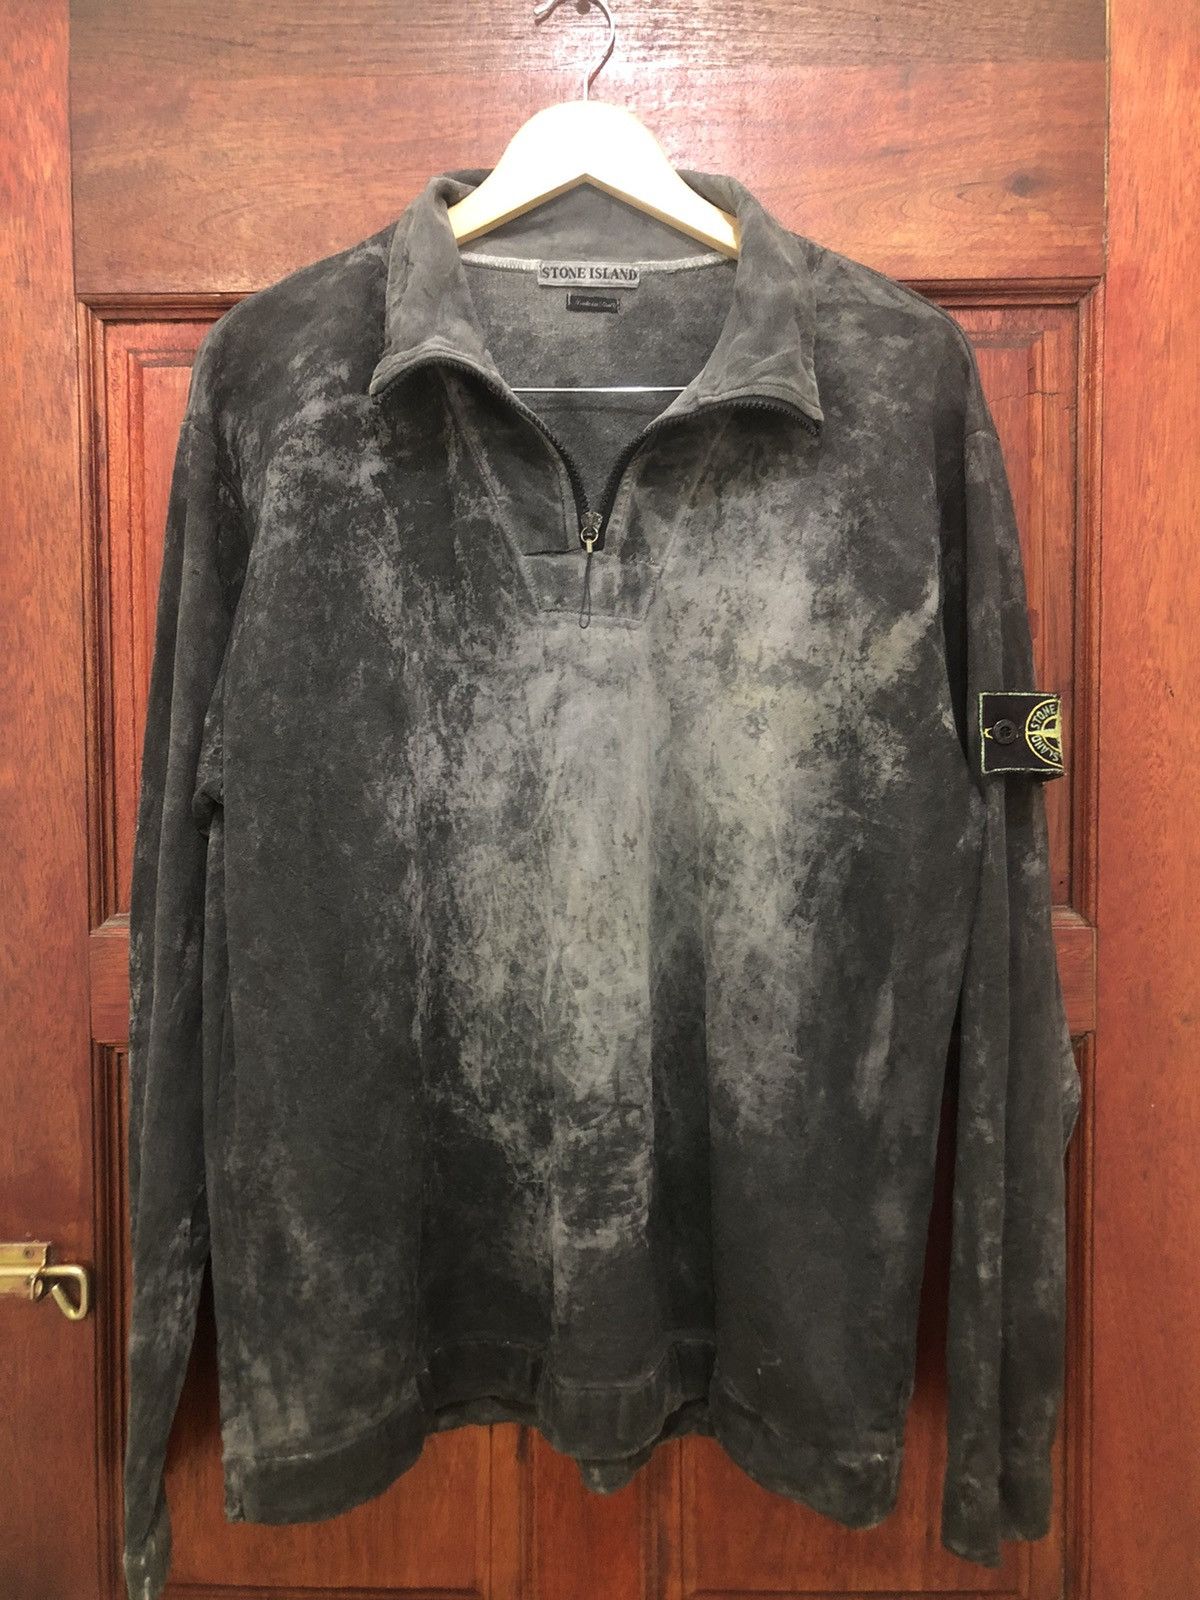 Stone Island SS96 Sweatshirt Acid Wash - 4